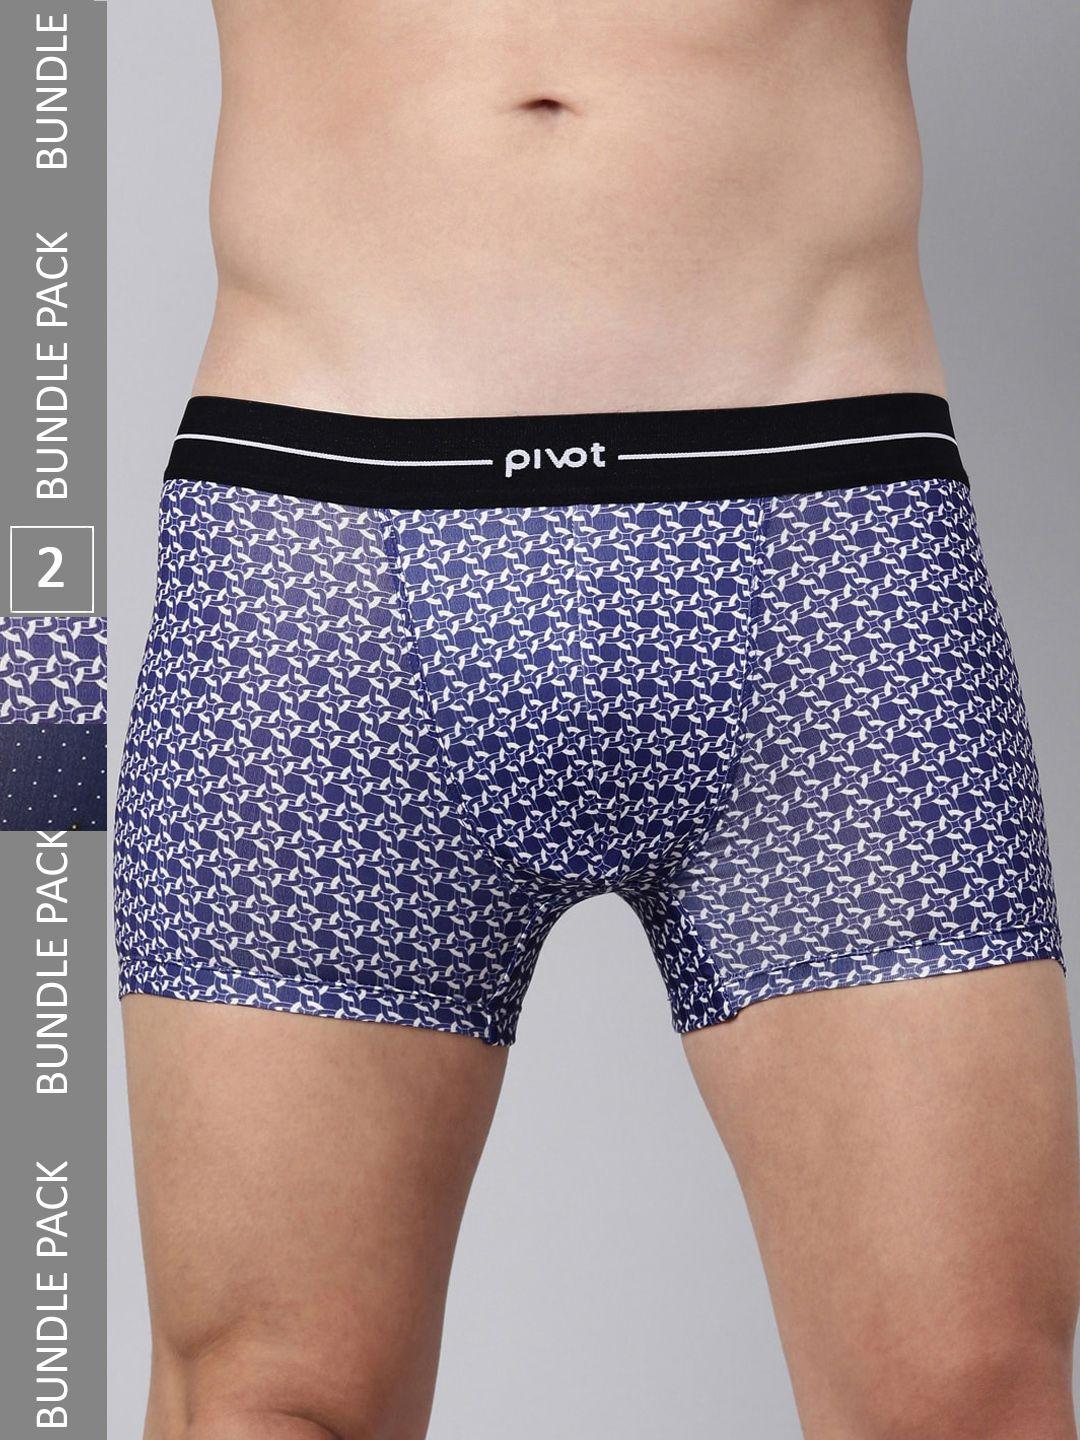 pivot men pack of 2 conversational printed trunks